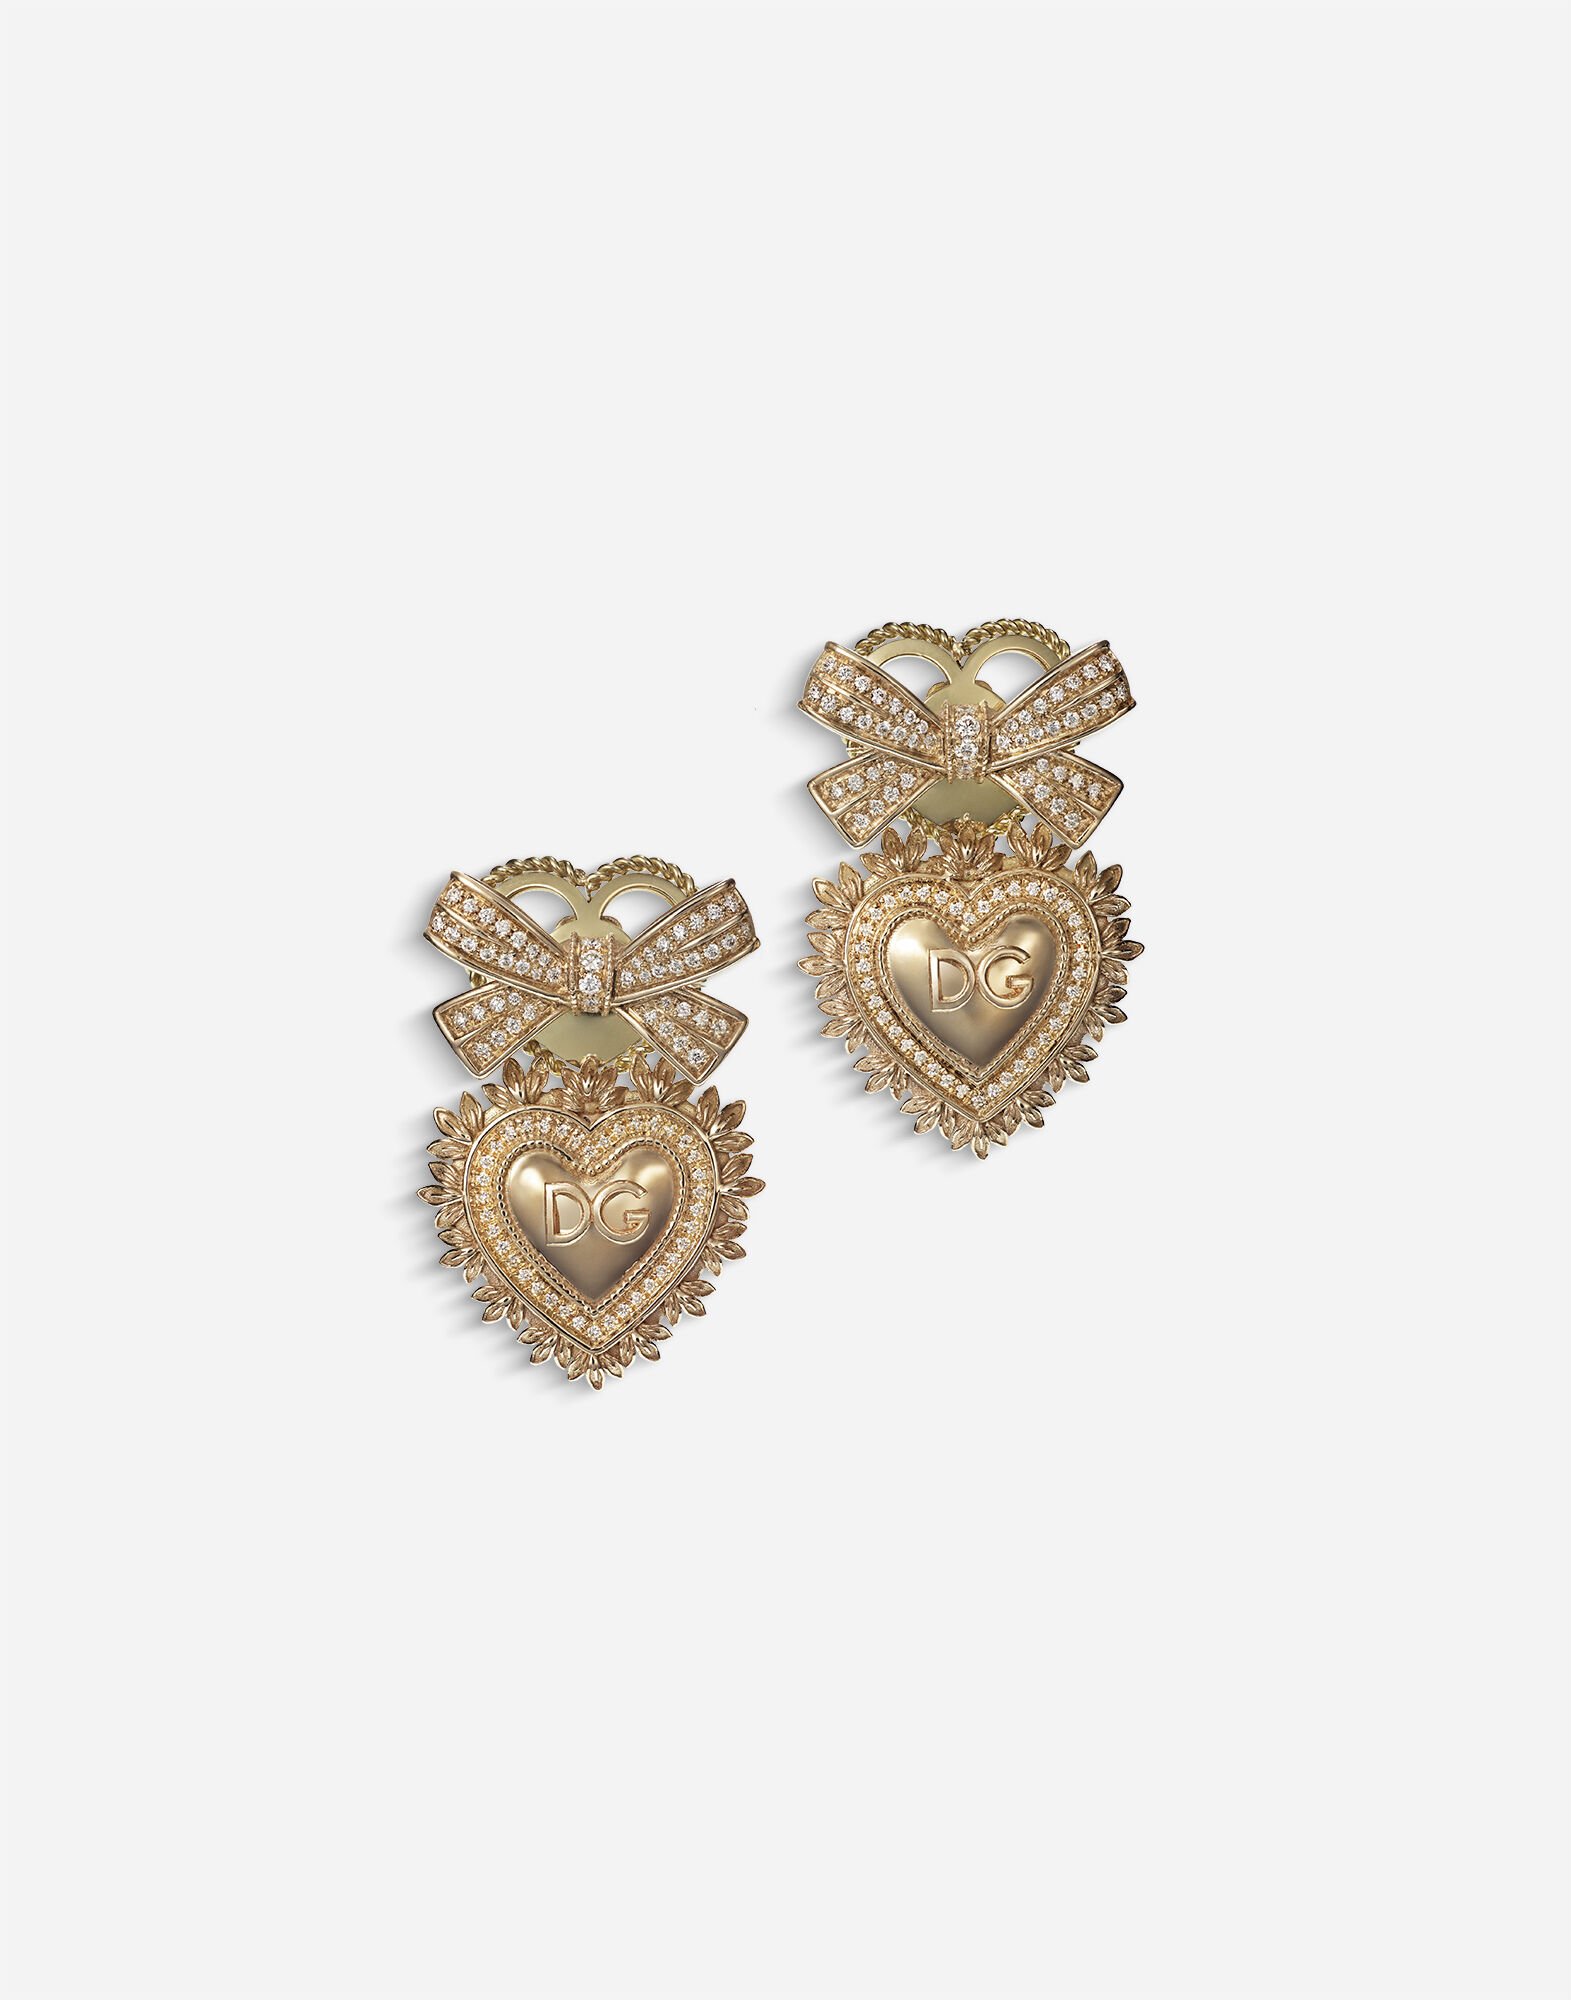 Dolce&Gabbana Devotion earrings in yellow gold with diamonds Gold WBP6C1W1111